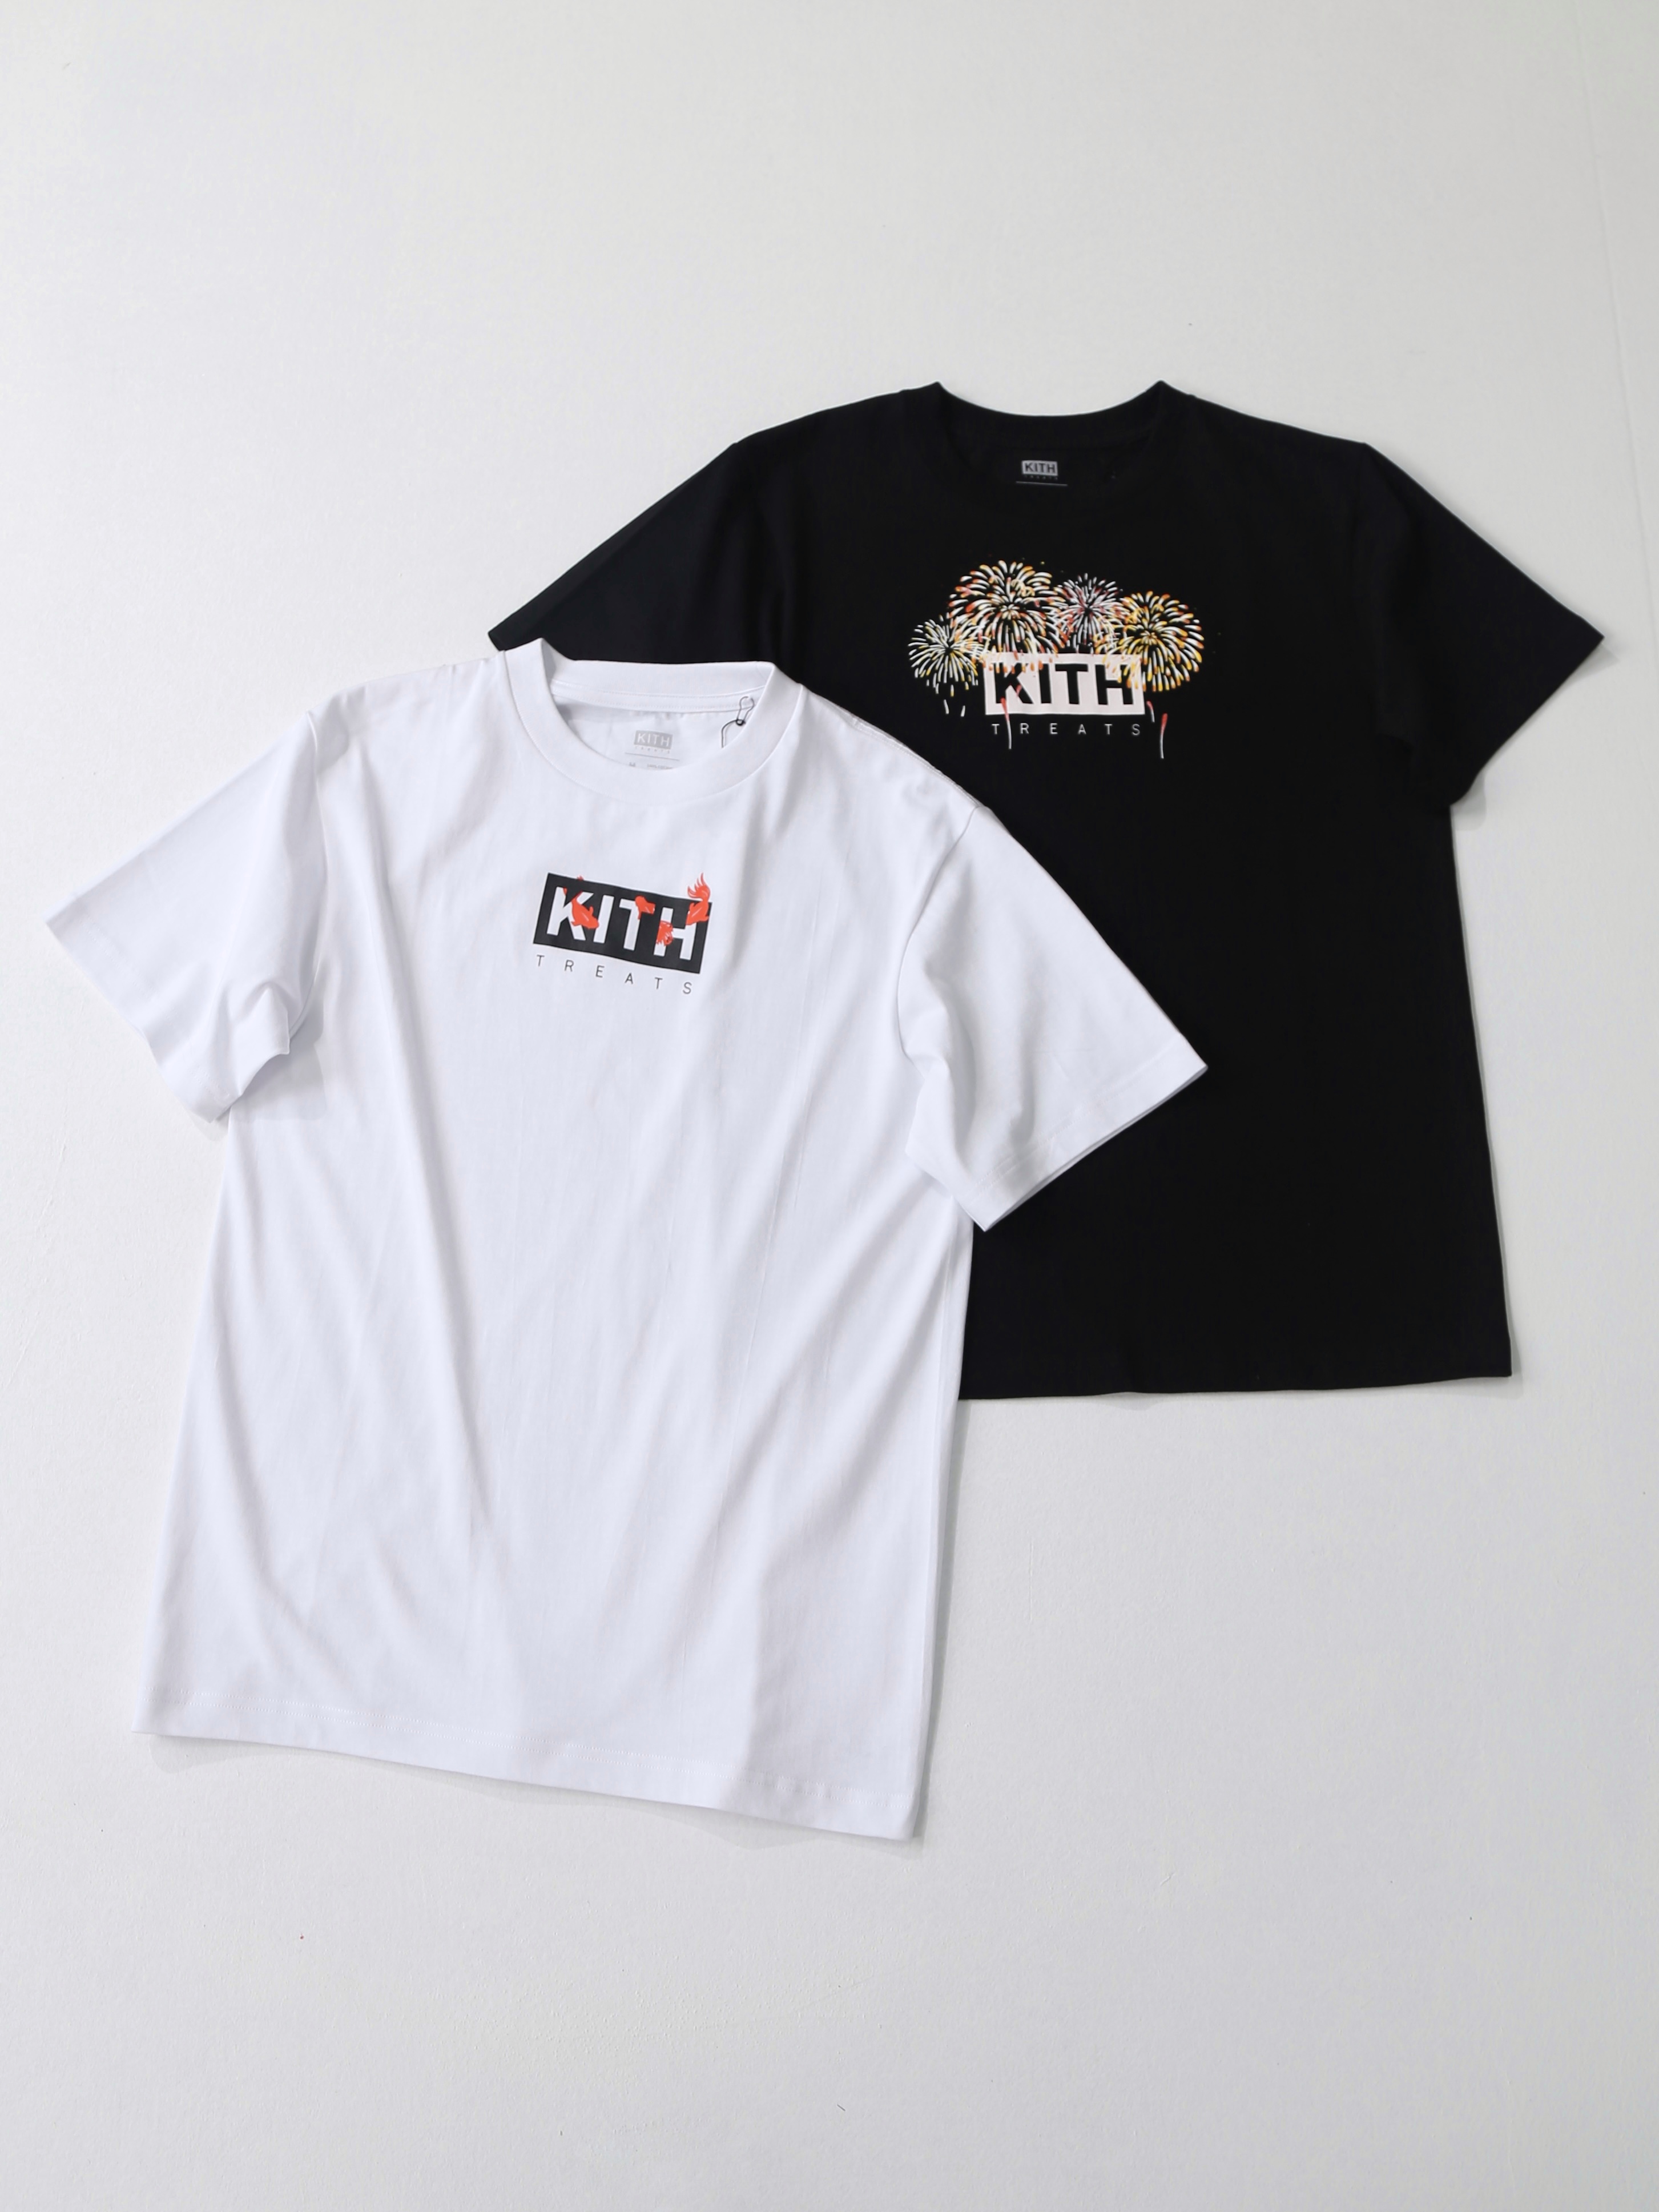 Kith Treats Tokyo 1st Anniversary Tee 东京一周年限定Tee T恤-Taobao